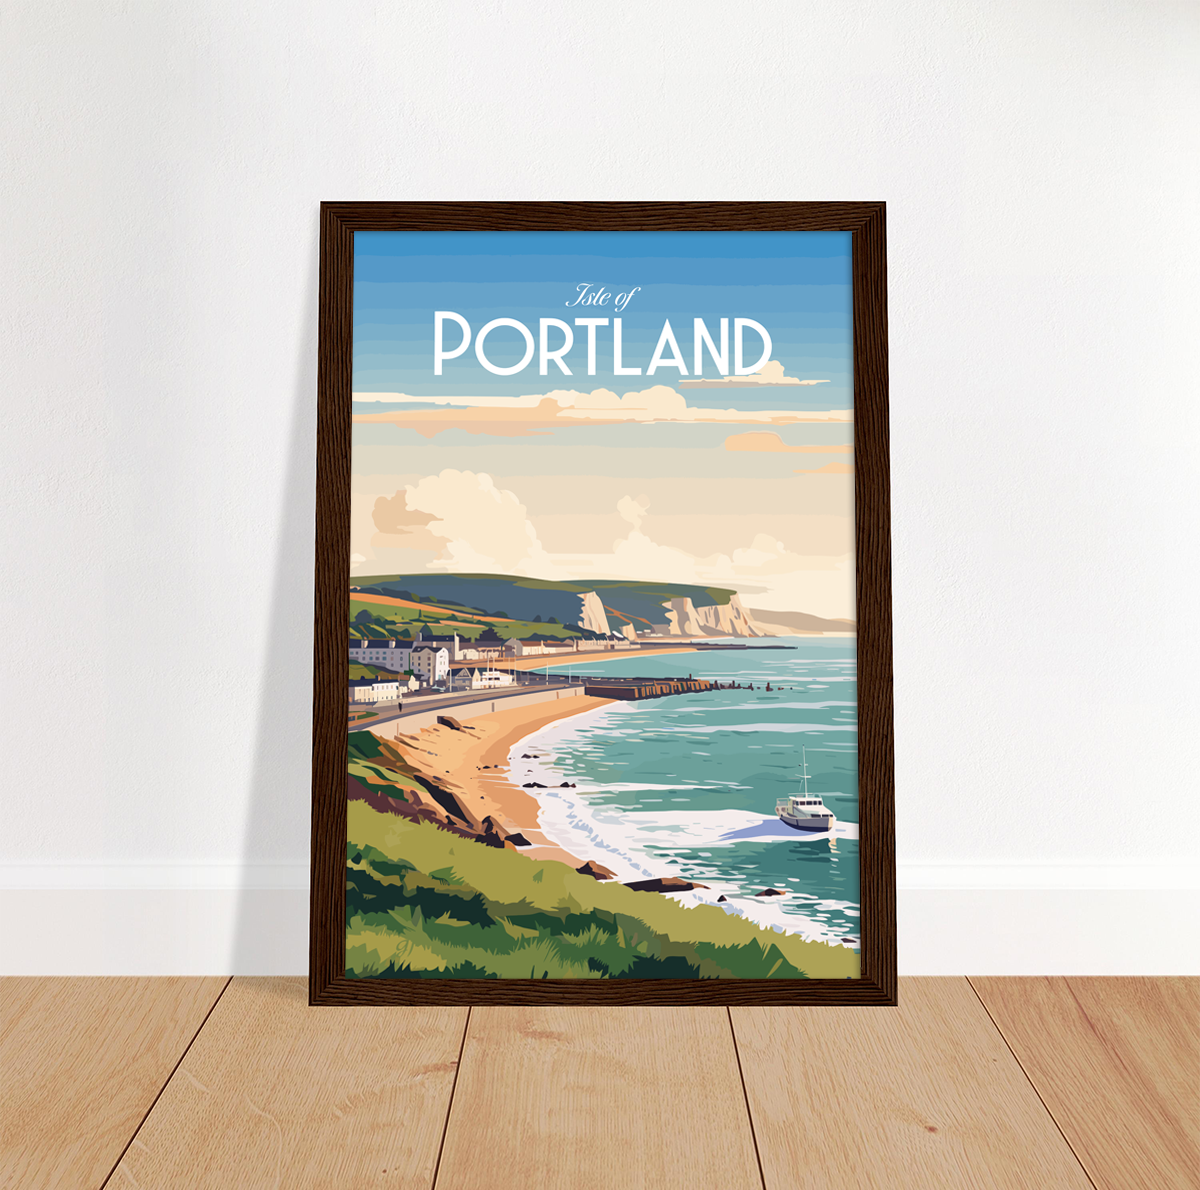 Isle of Portland poster by bon voyage design